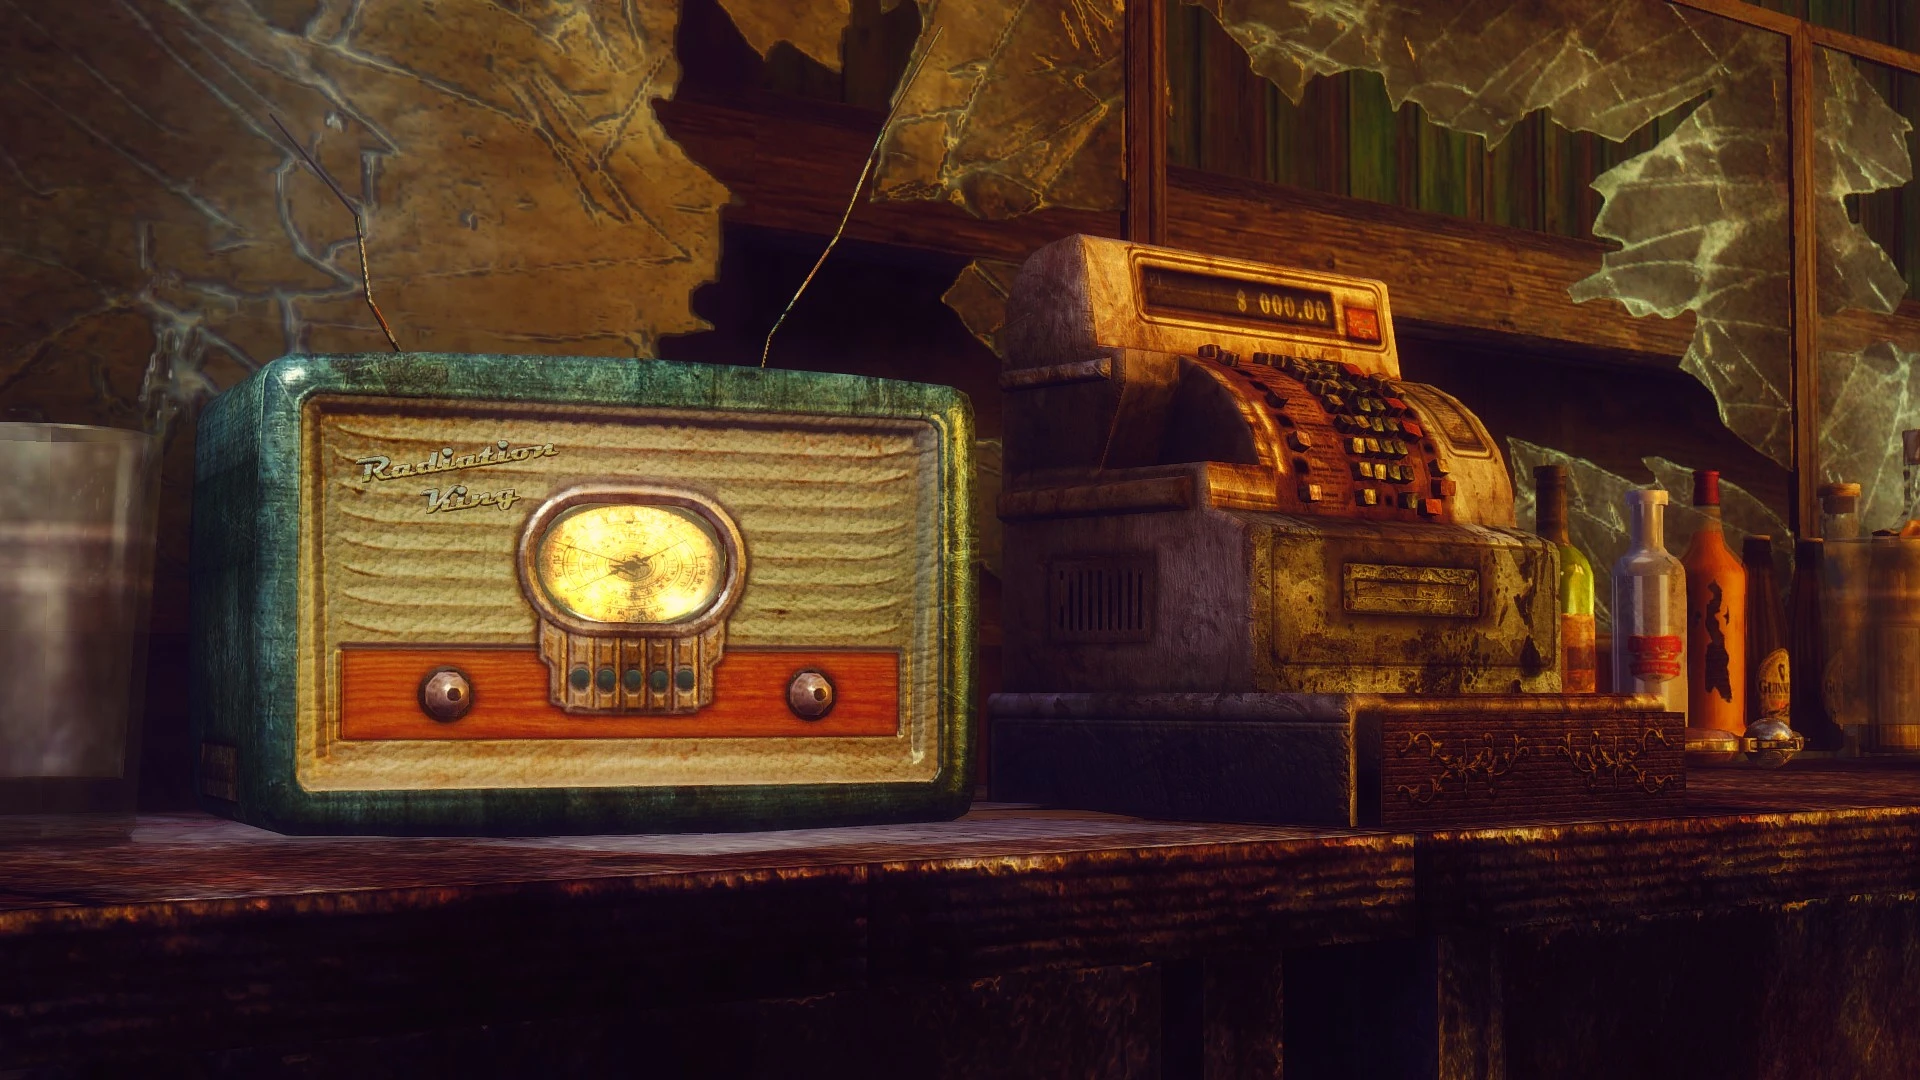 fallout new vegas custom radio